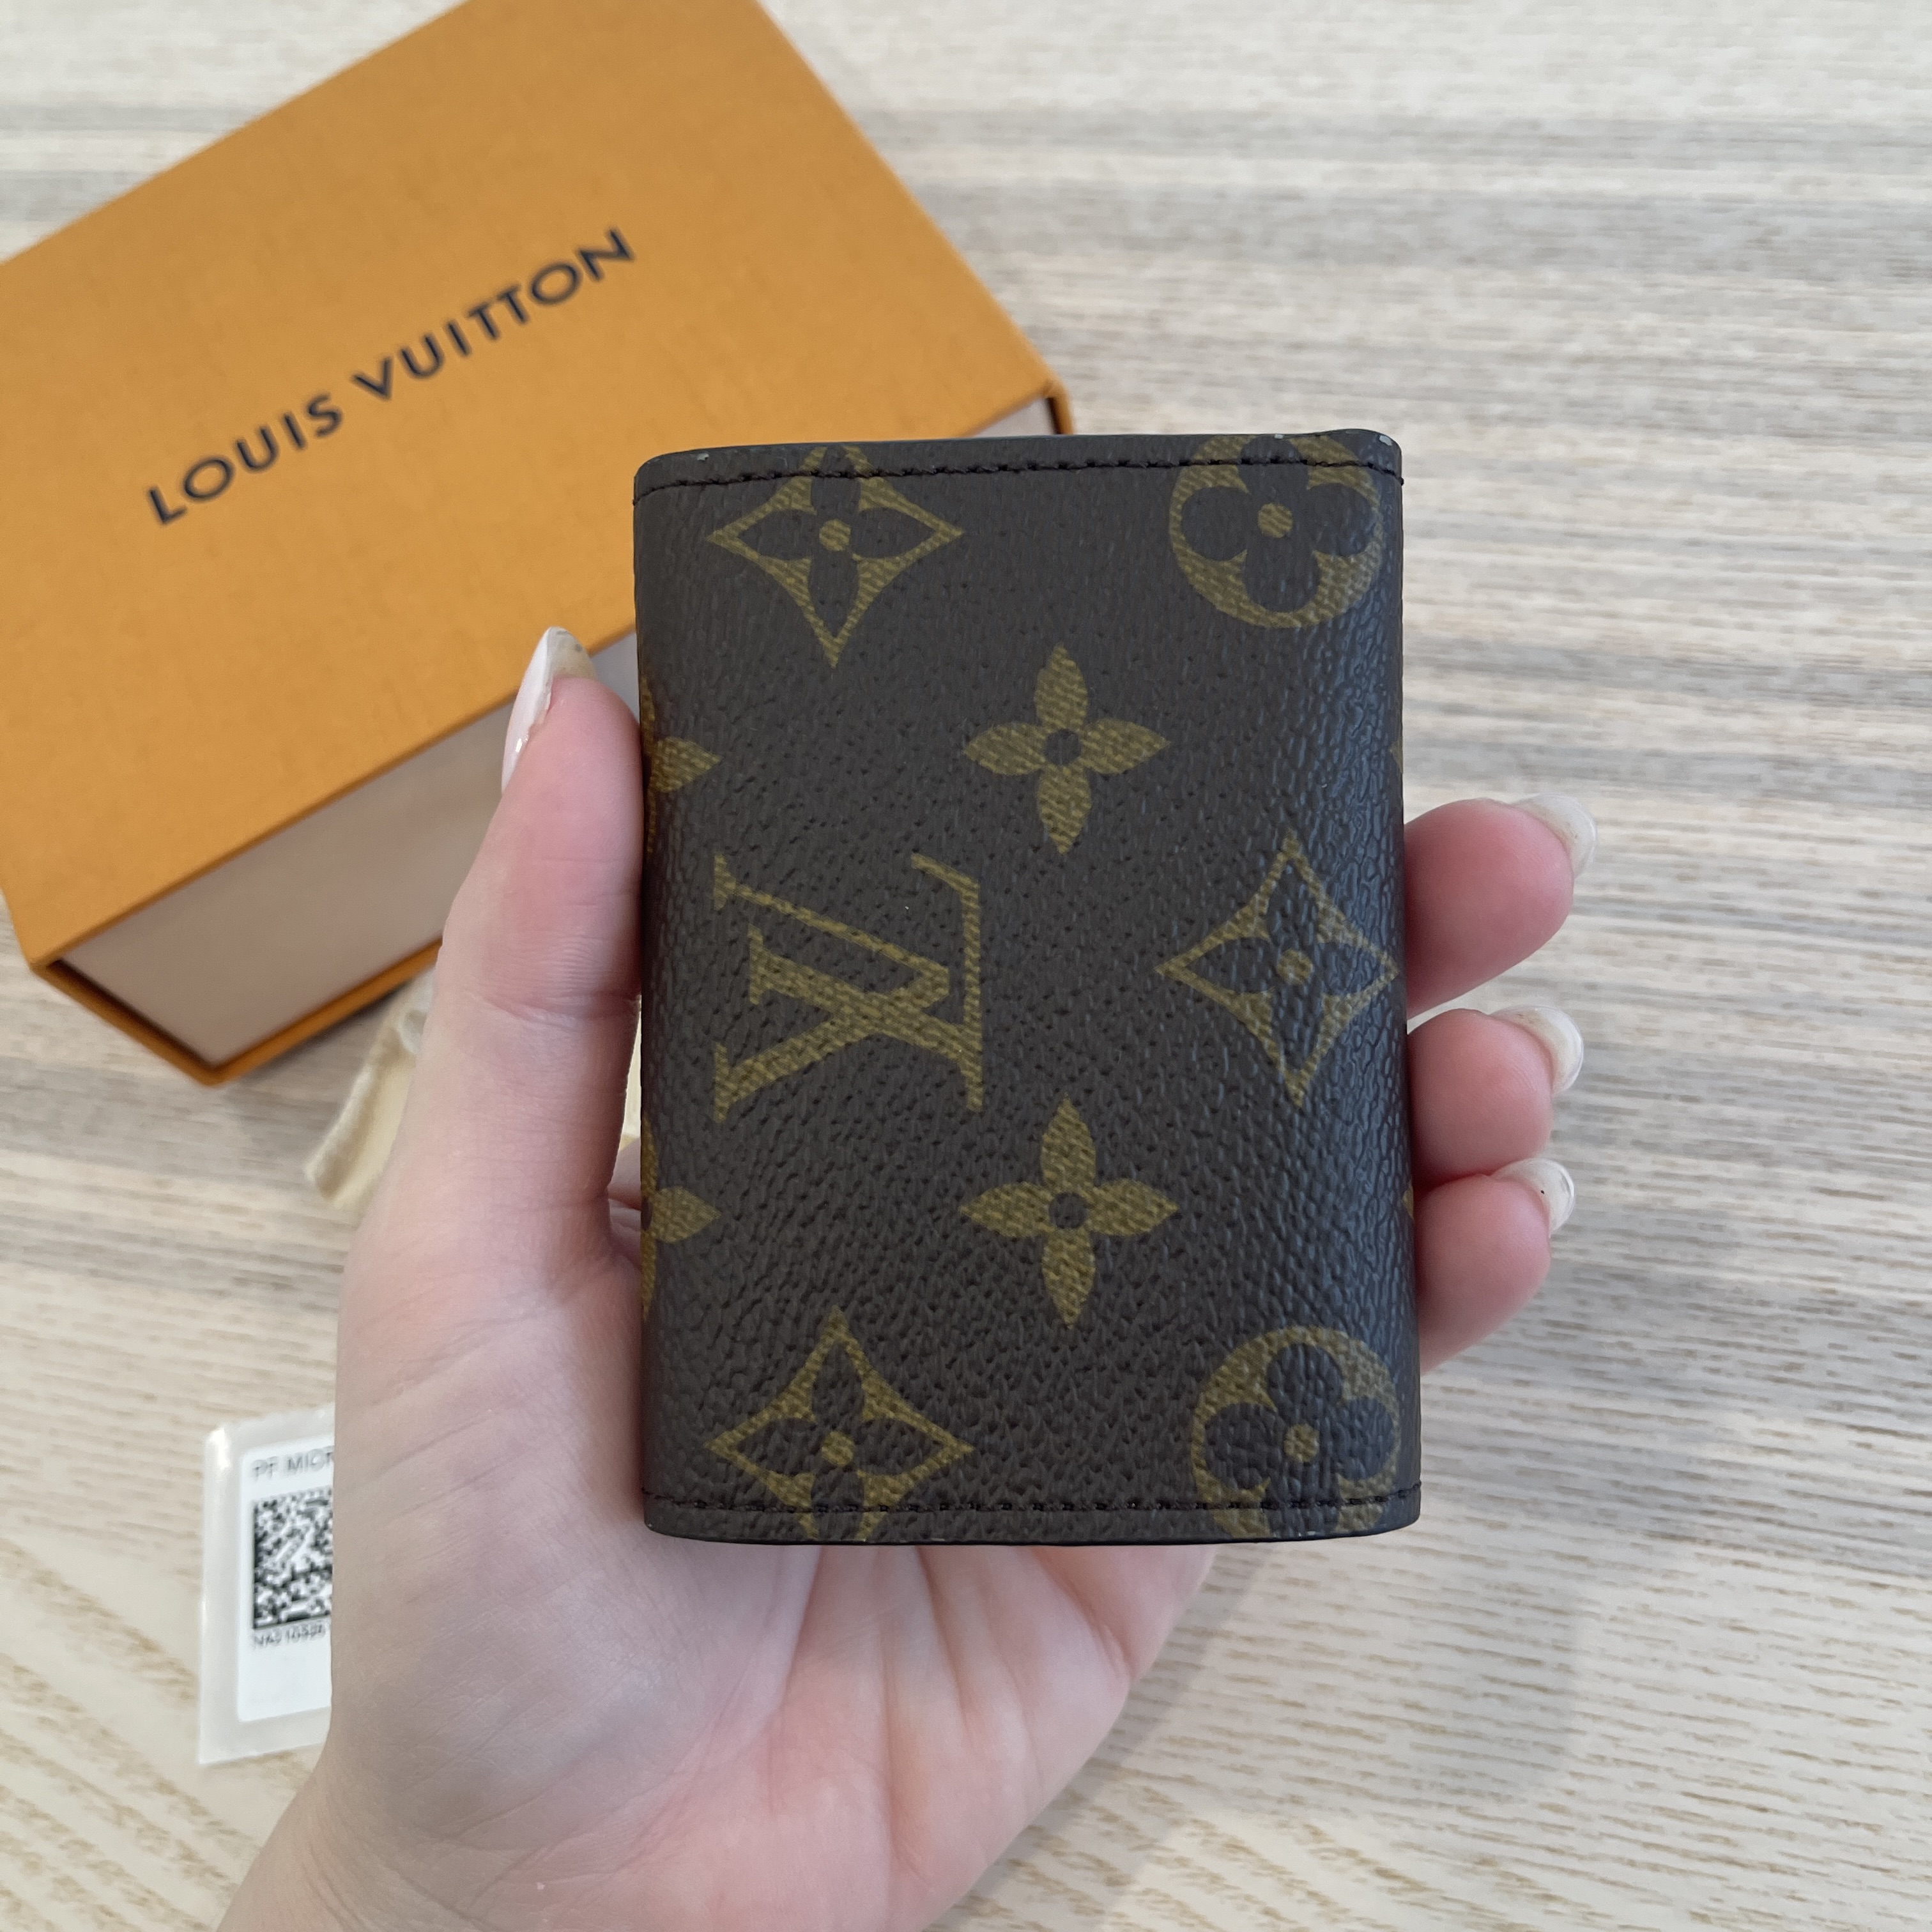 Louis Vuitton Micro Wallet Review, Pros & Cons, Wear & Tear